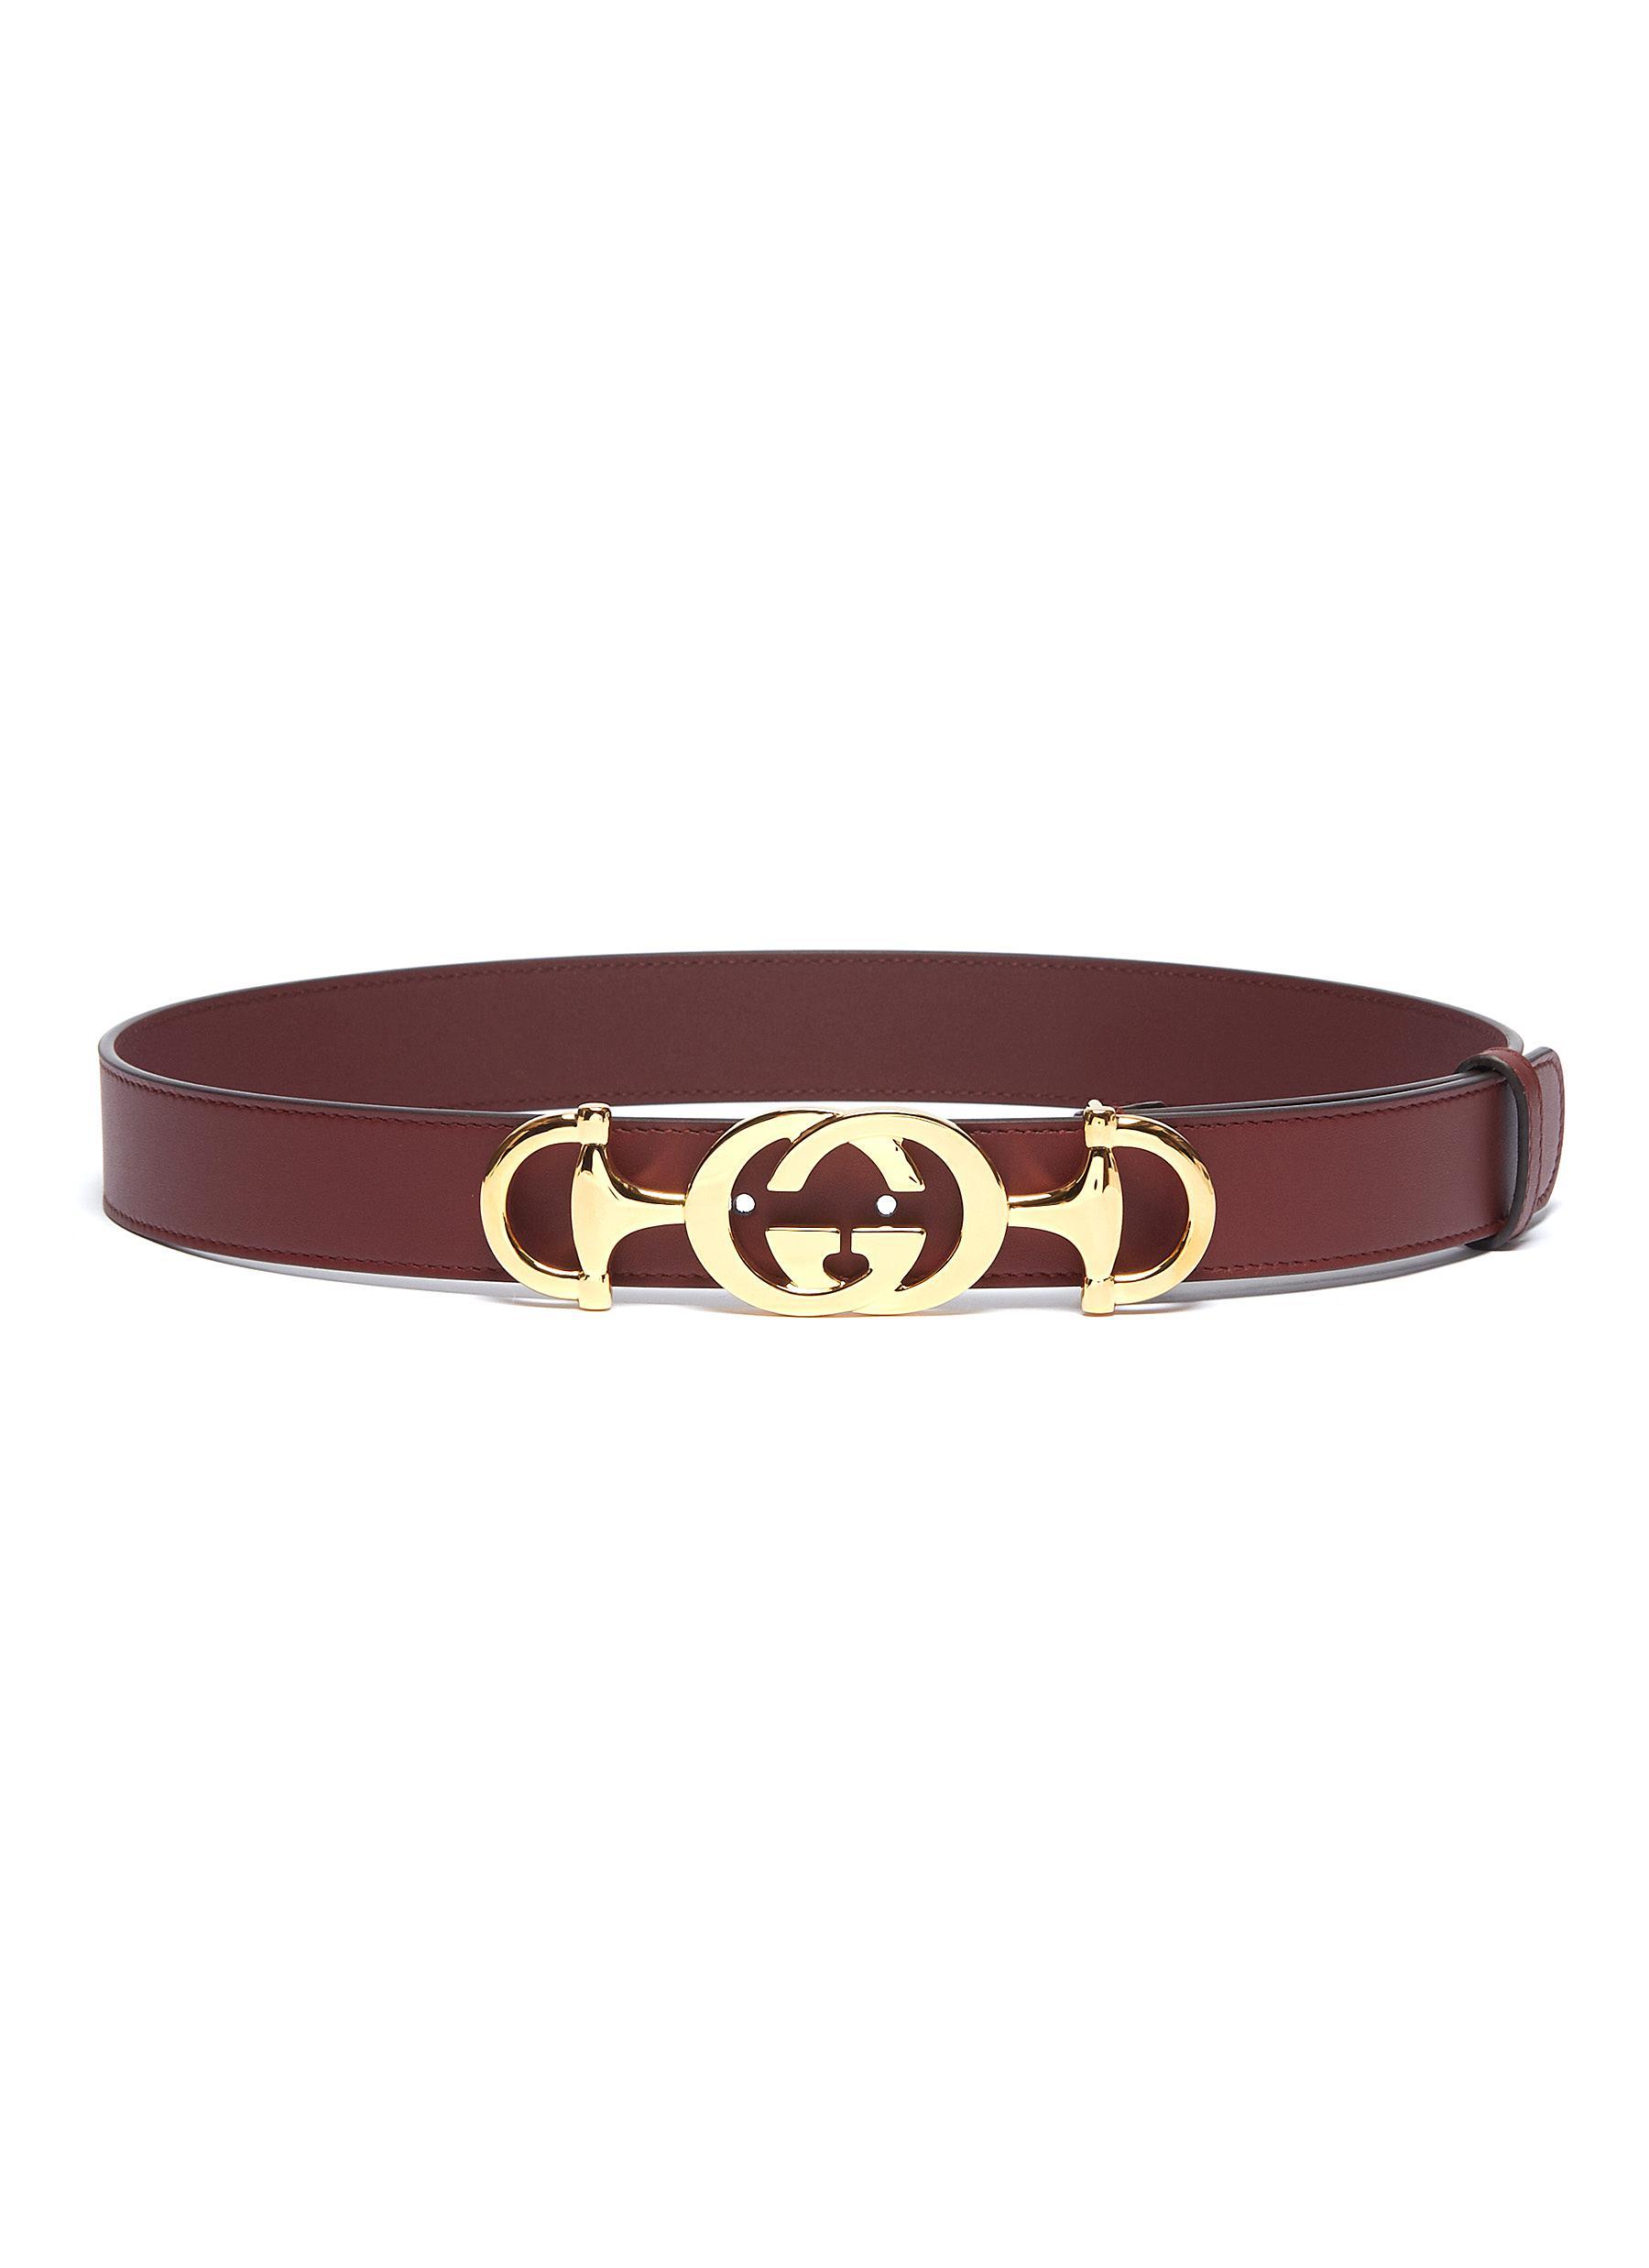 Gucci Horsebit GG Logo Buckle Leather Belt for Men - Lyst